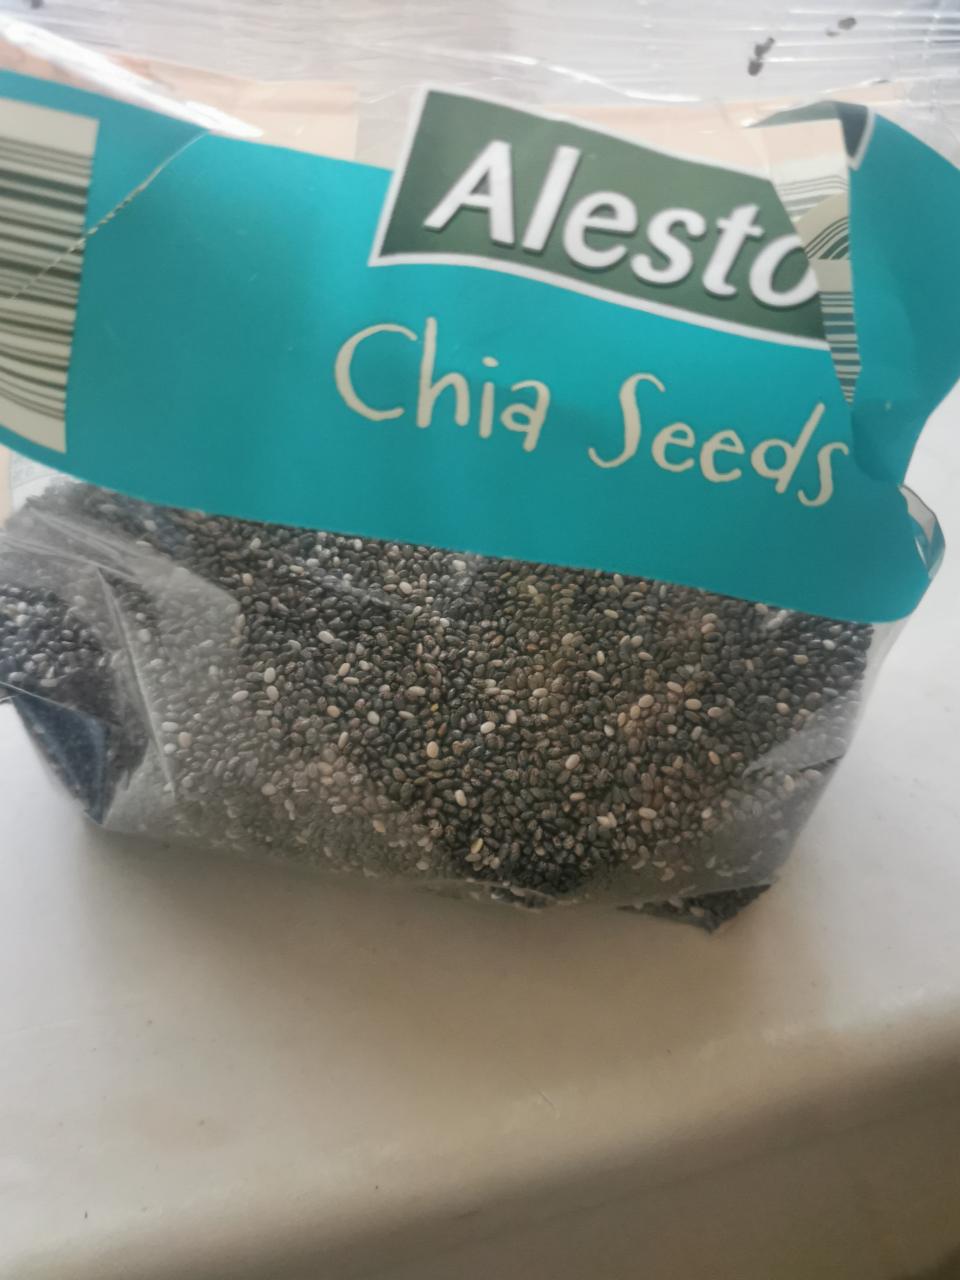 Képek - Chia seeds Alesto